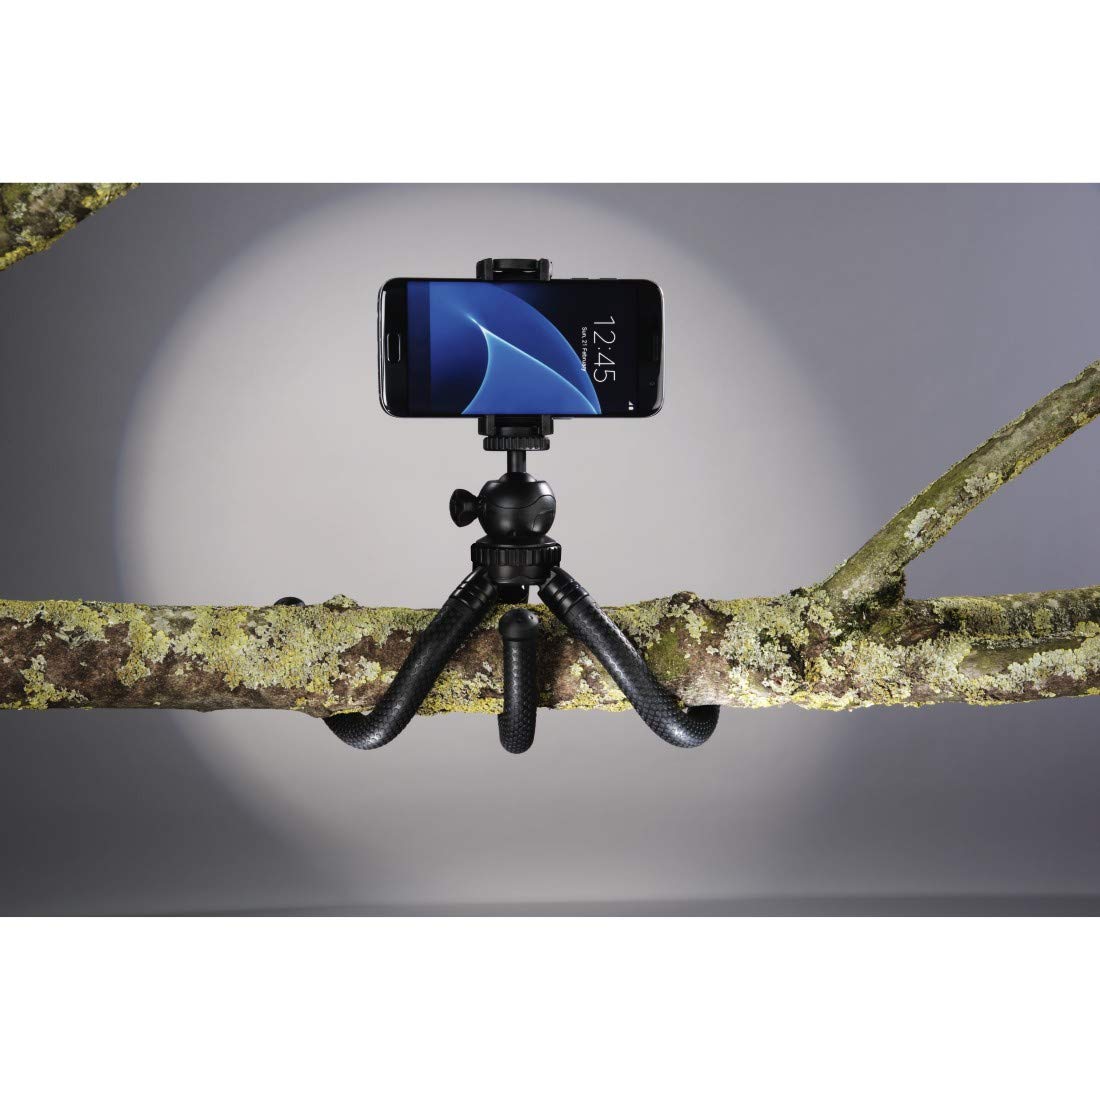 Hama Flexpro For Smartphone GoPro Photo Cameras Bendable Tripod Leg Segments 1 Section